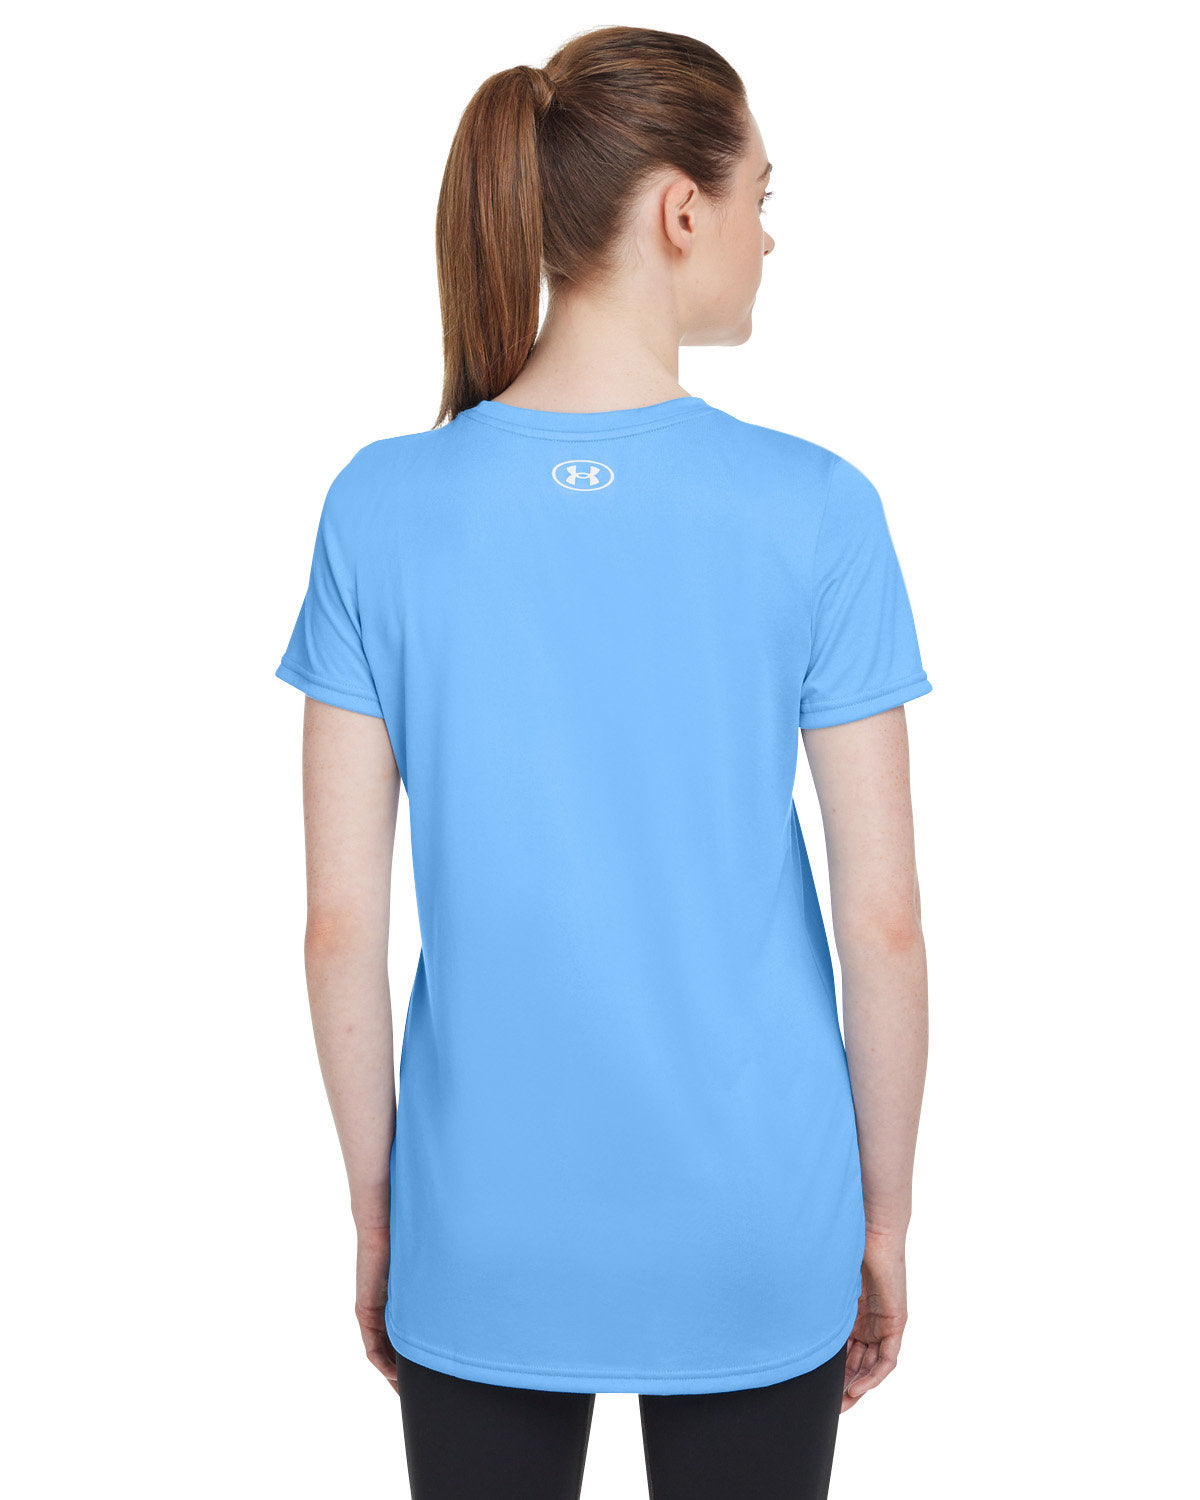 Under Armour Ladies Tech Branded T-Shirts, Carol Blue